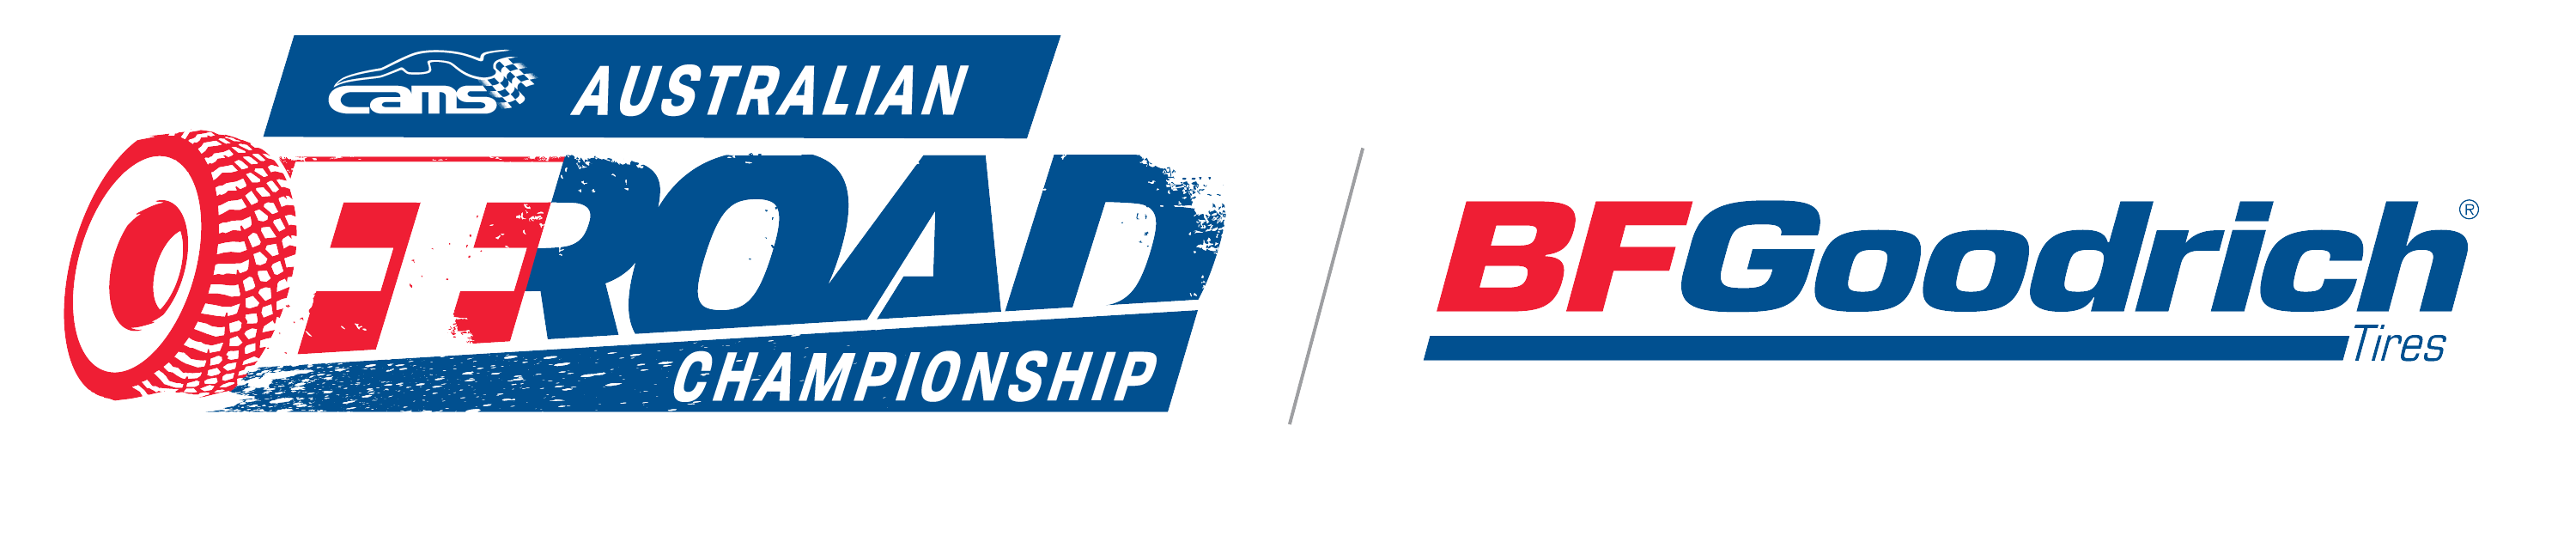 Off-Road Brand Logo - BFGoodrich CAMS Australian Off Road Championship